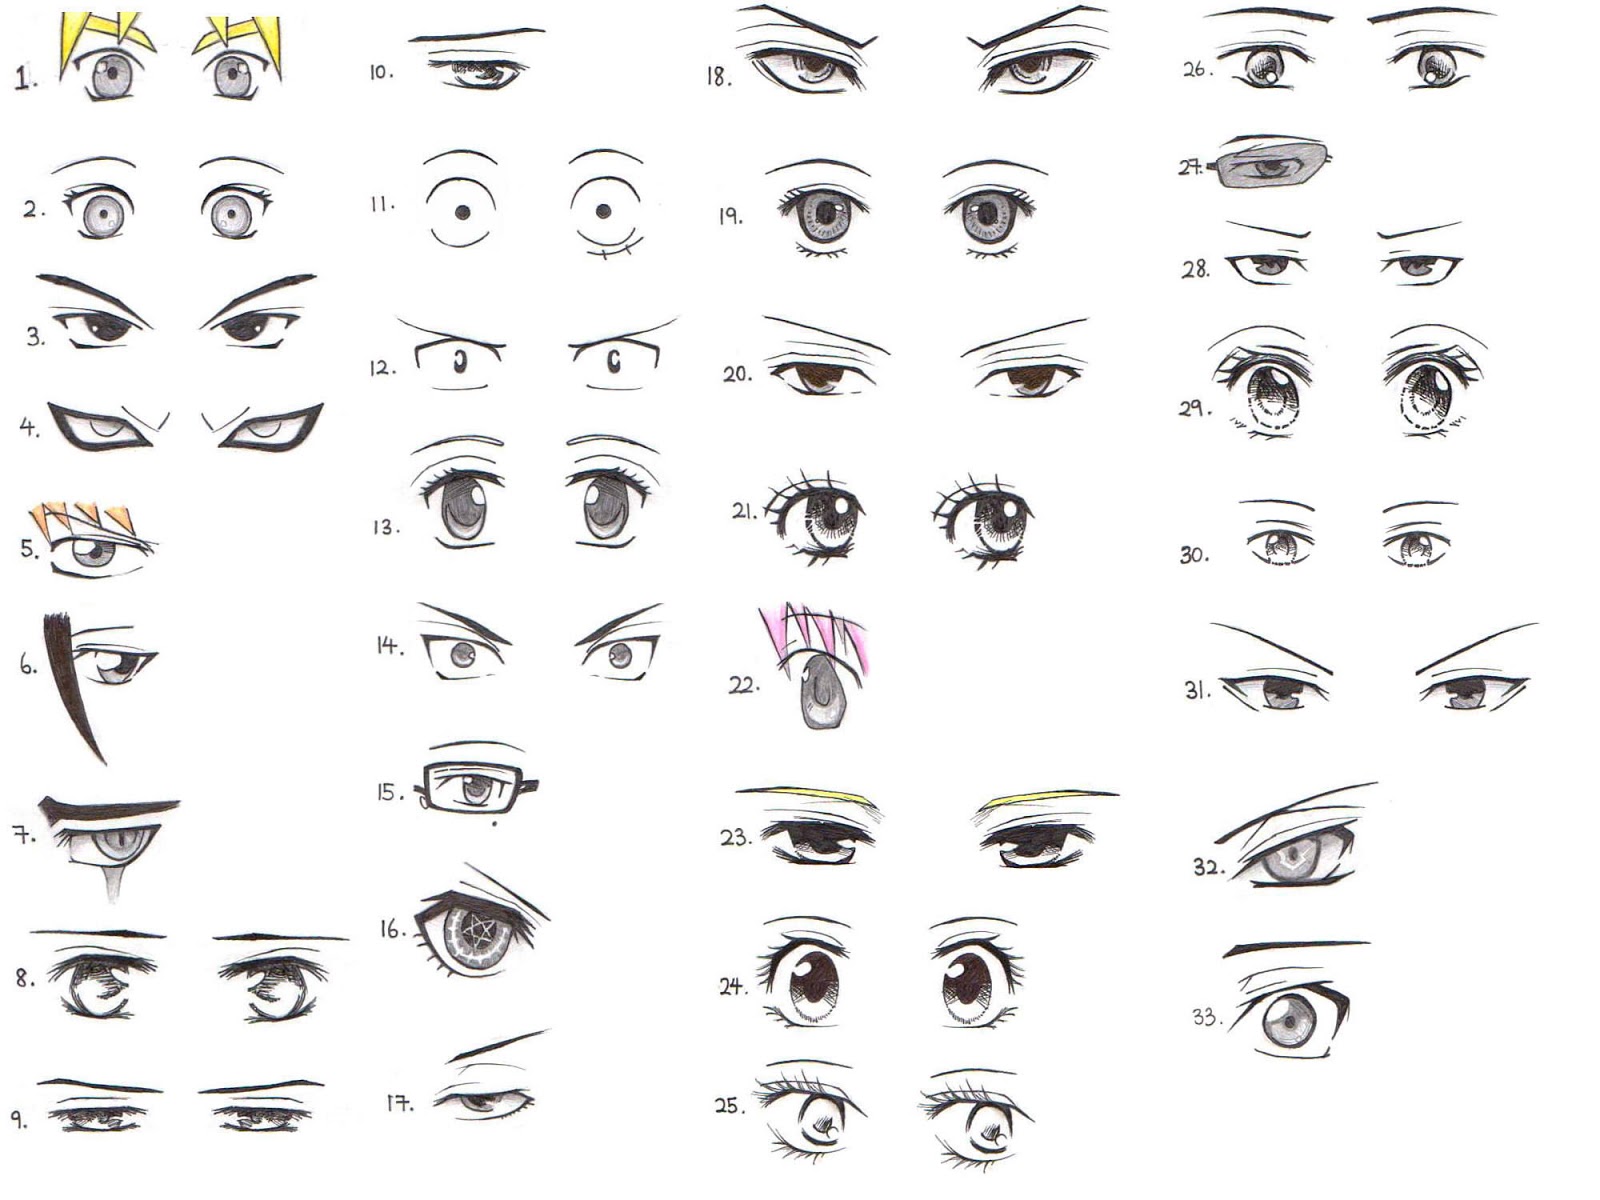 Dibujos de ojos anime - Imagui